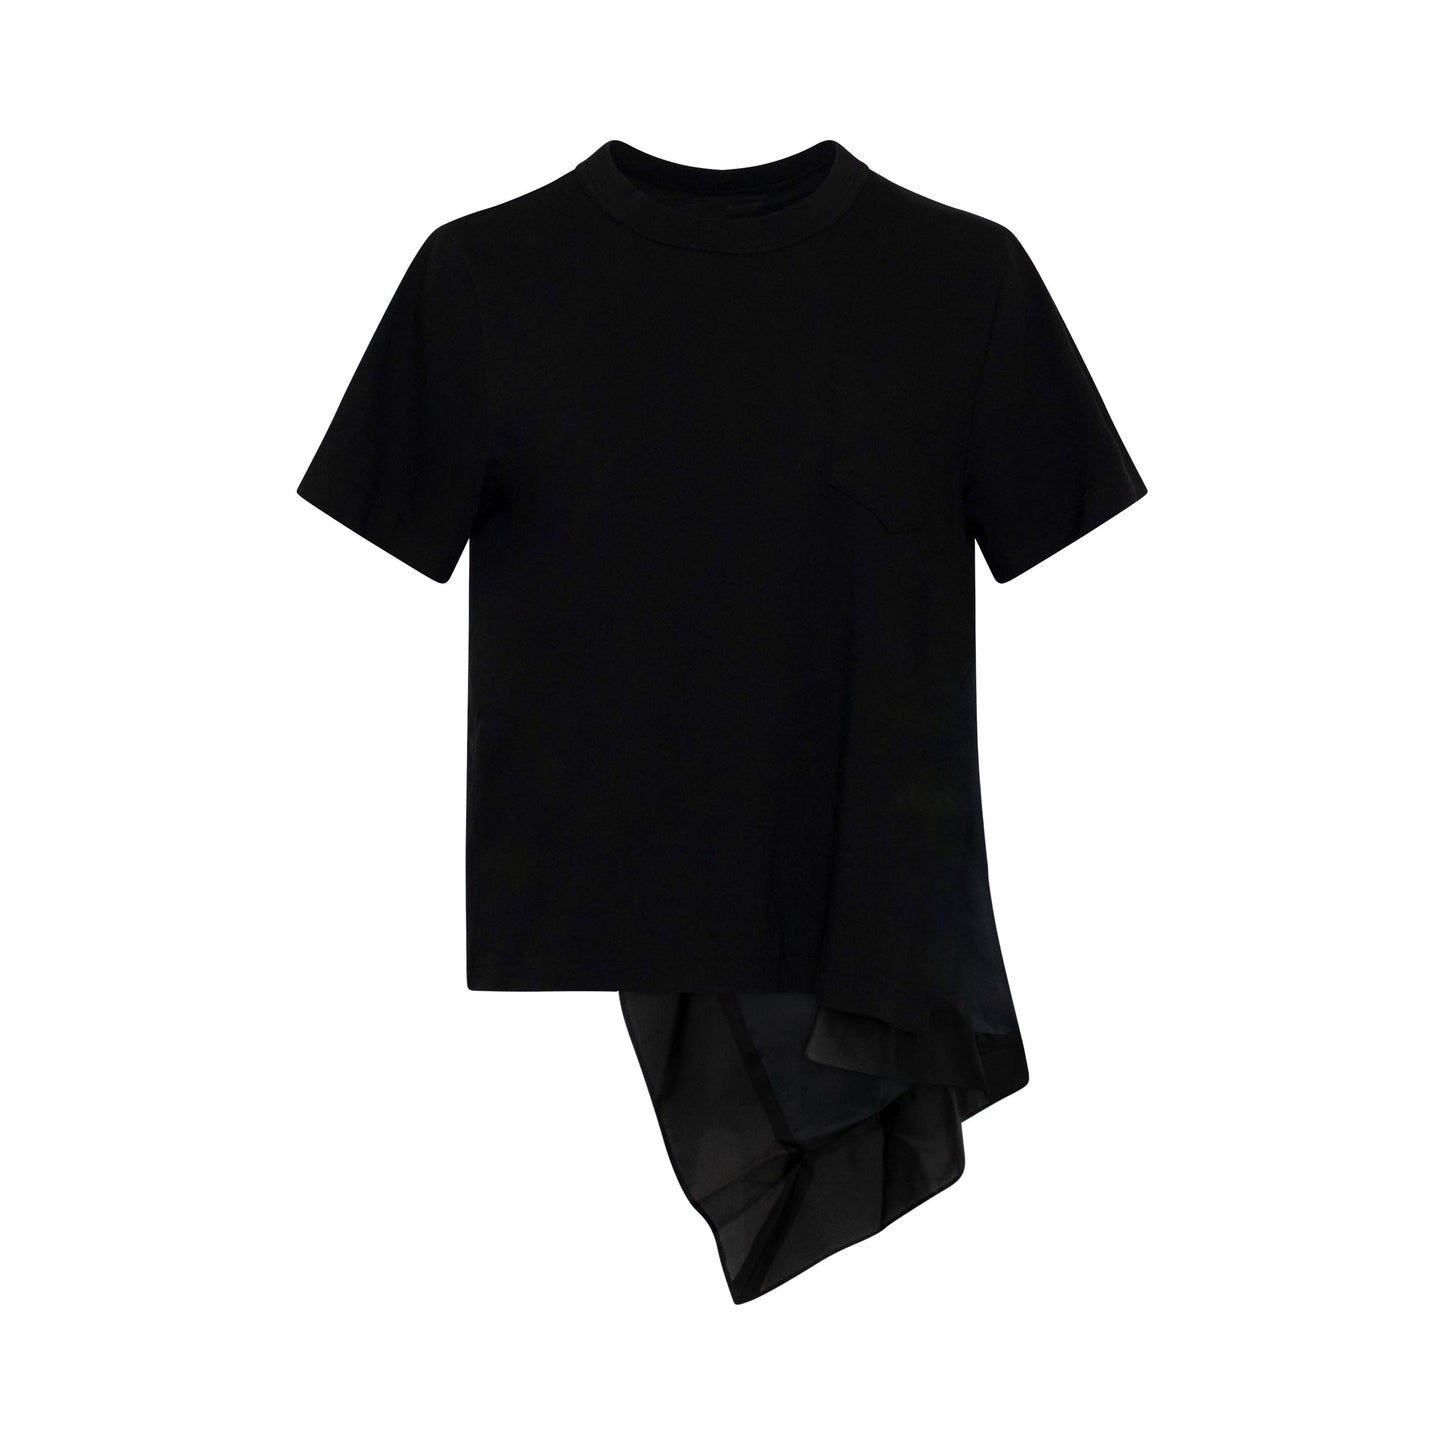 Scarf Detail T-Shirt in Black